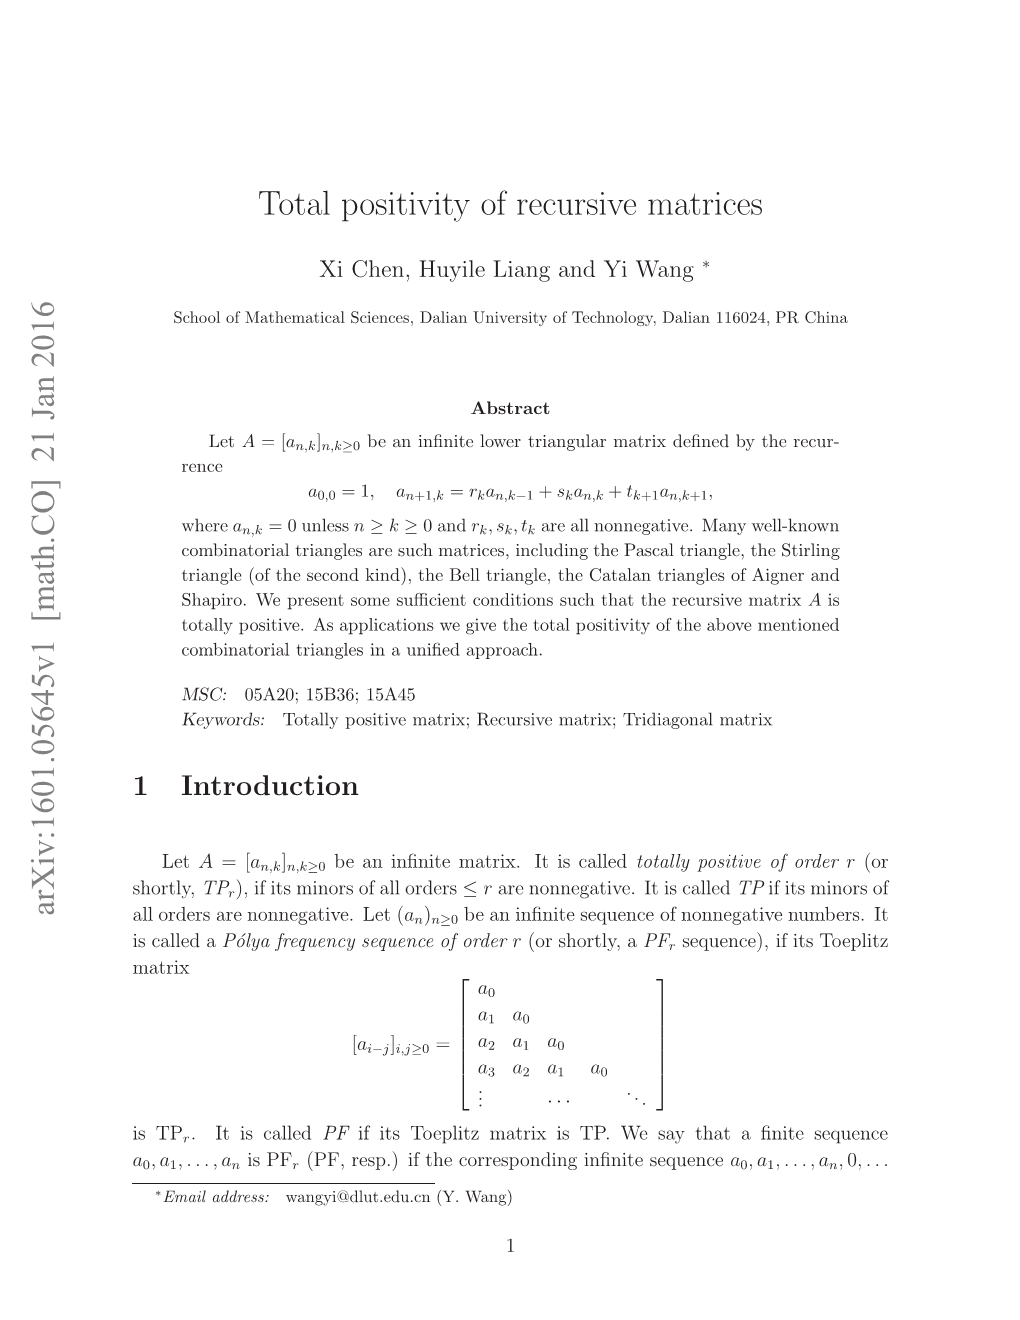 Total Positivity of Recursive Matrices